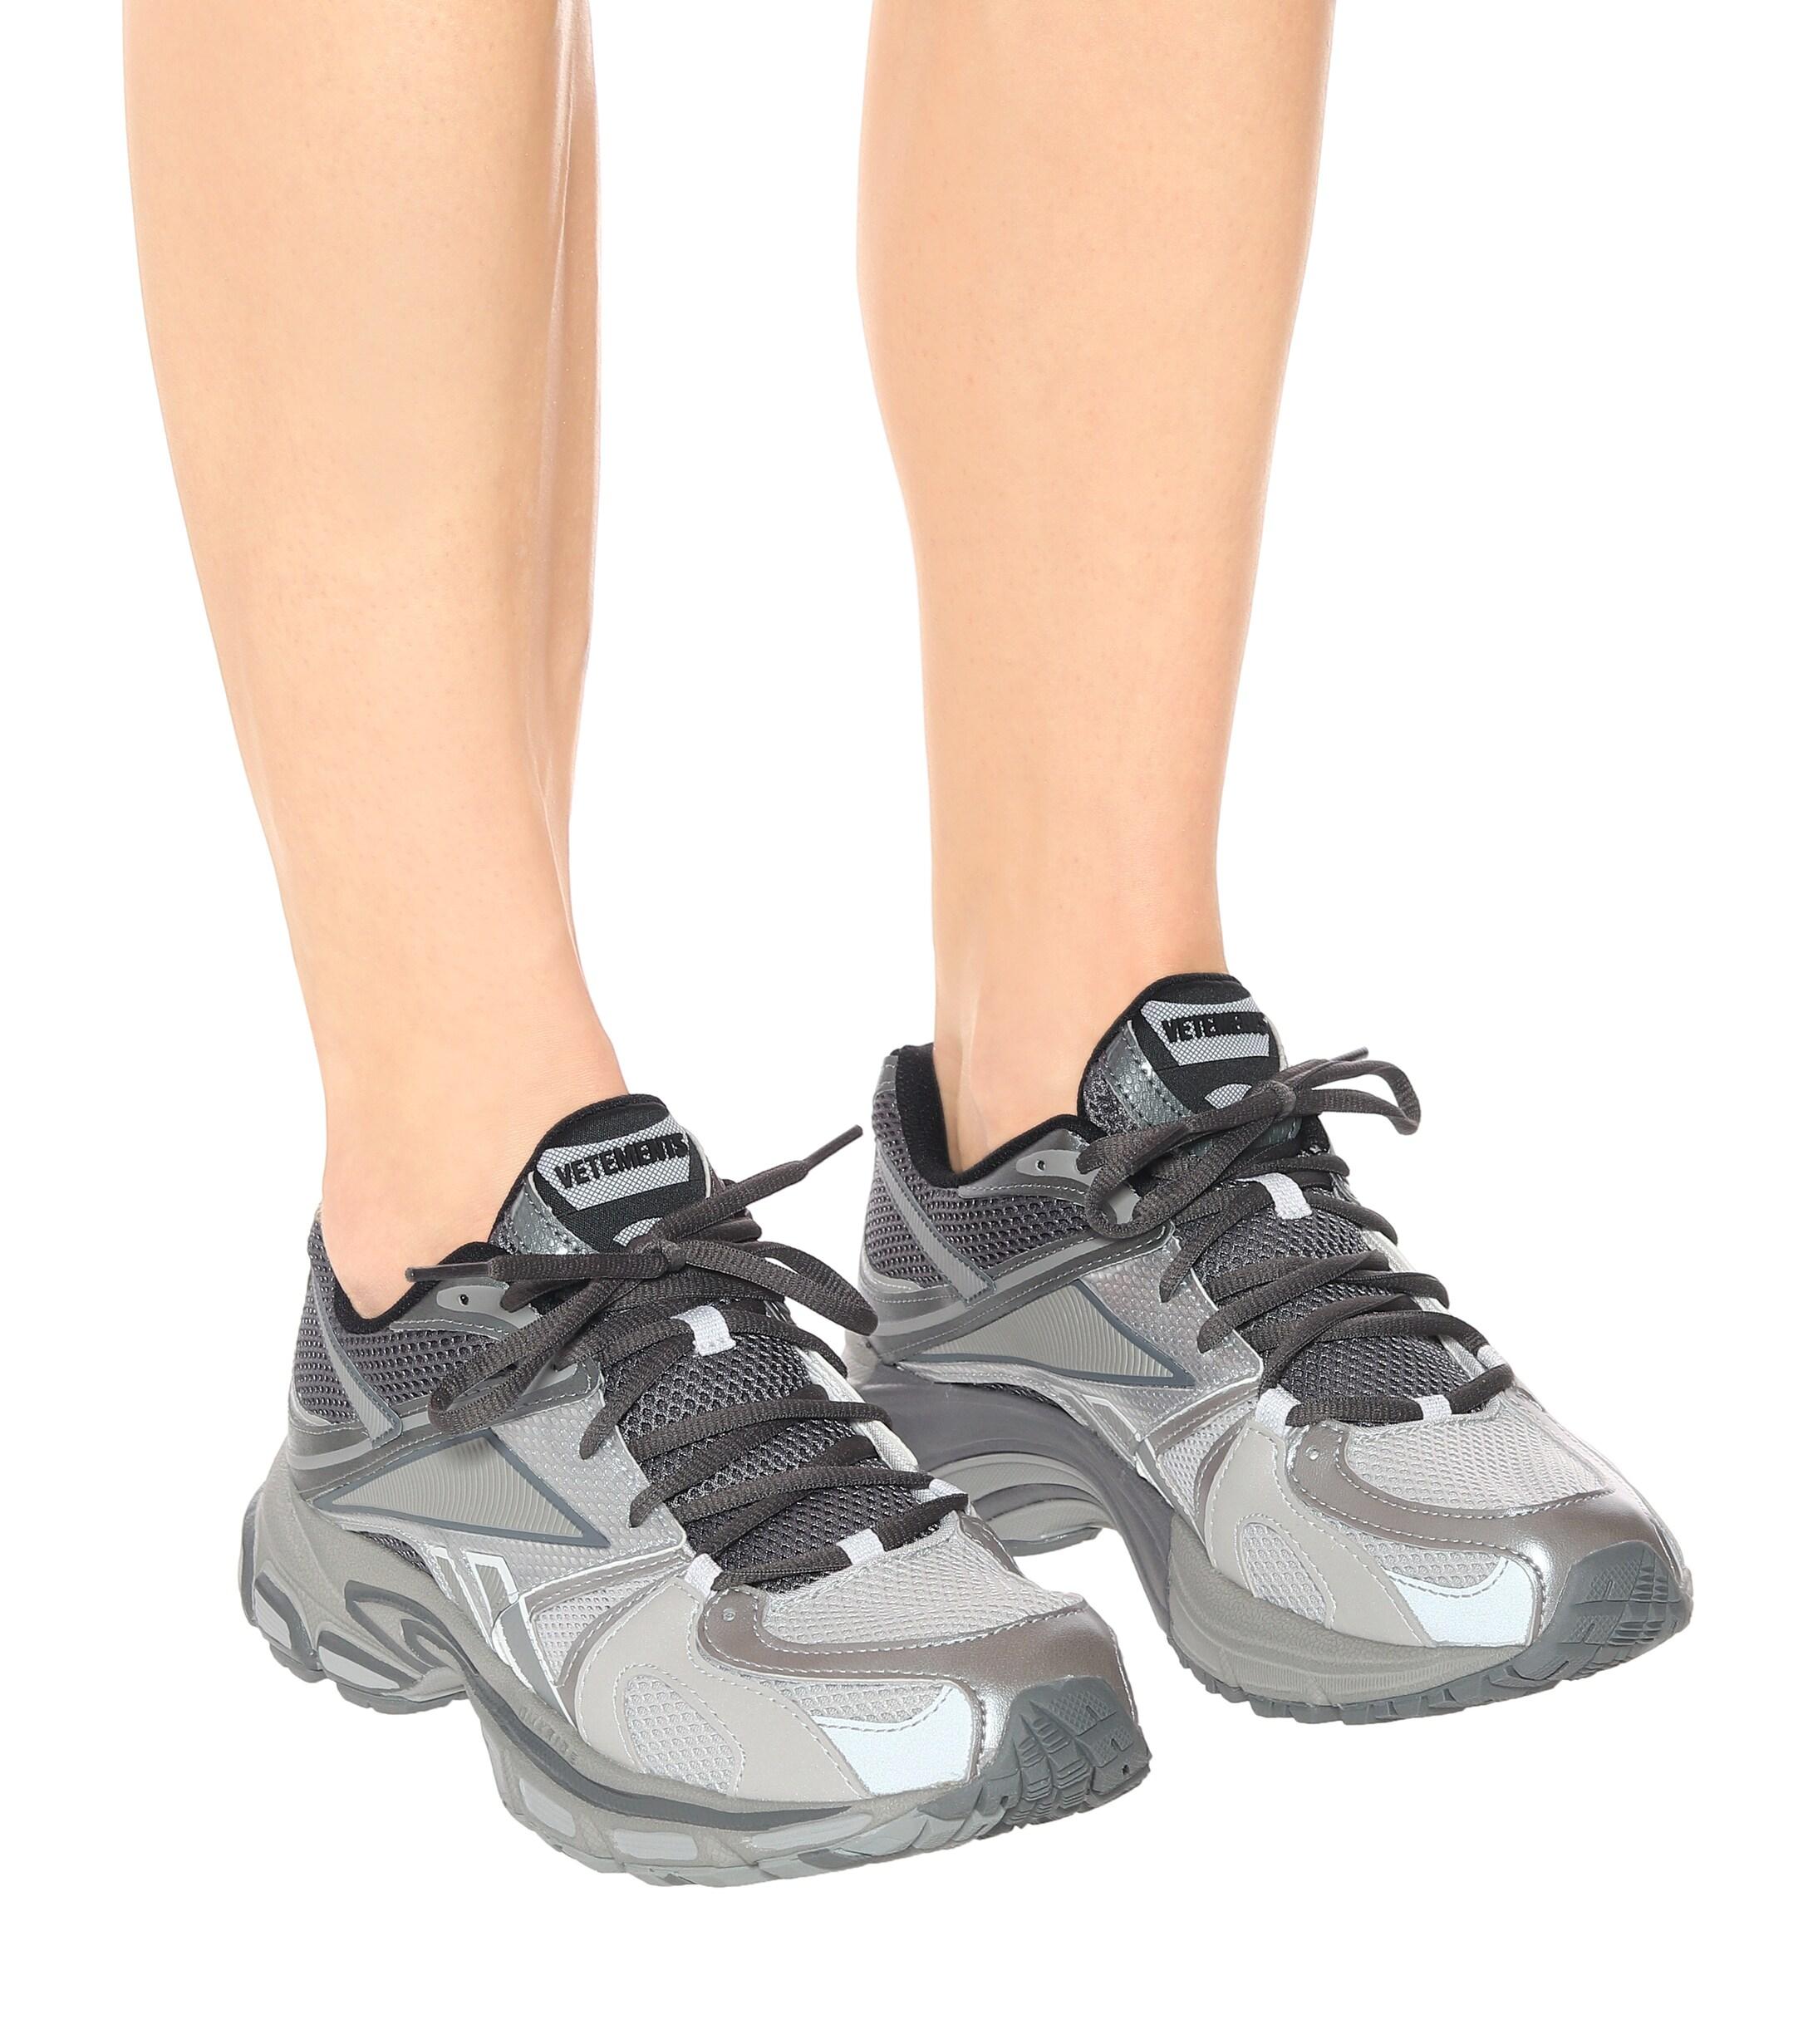 Vetements X Reebok Spike Runner 200 Sneakers in Gray